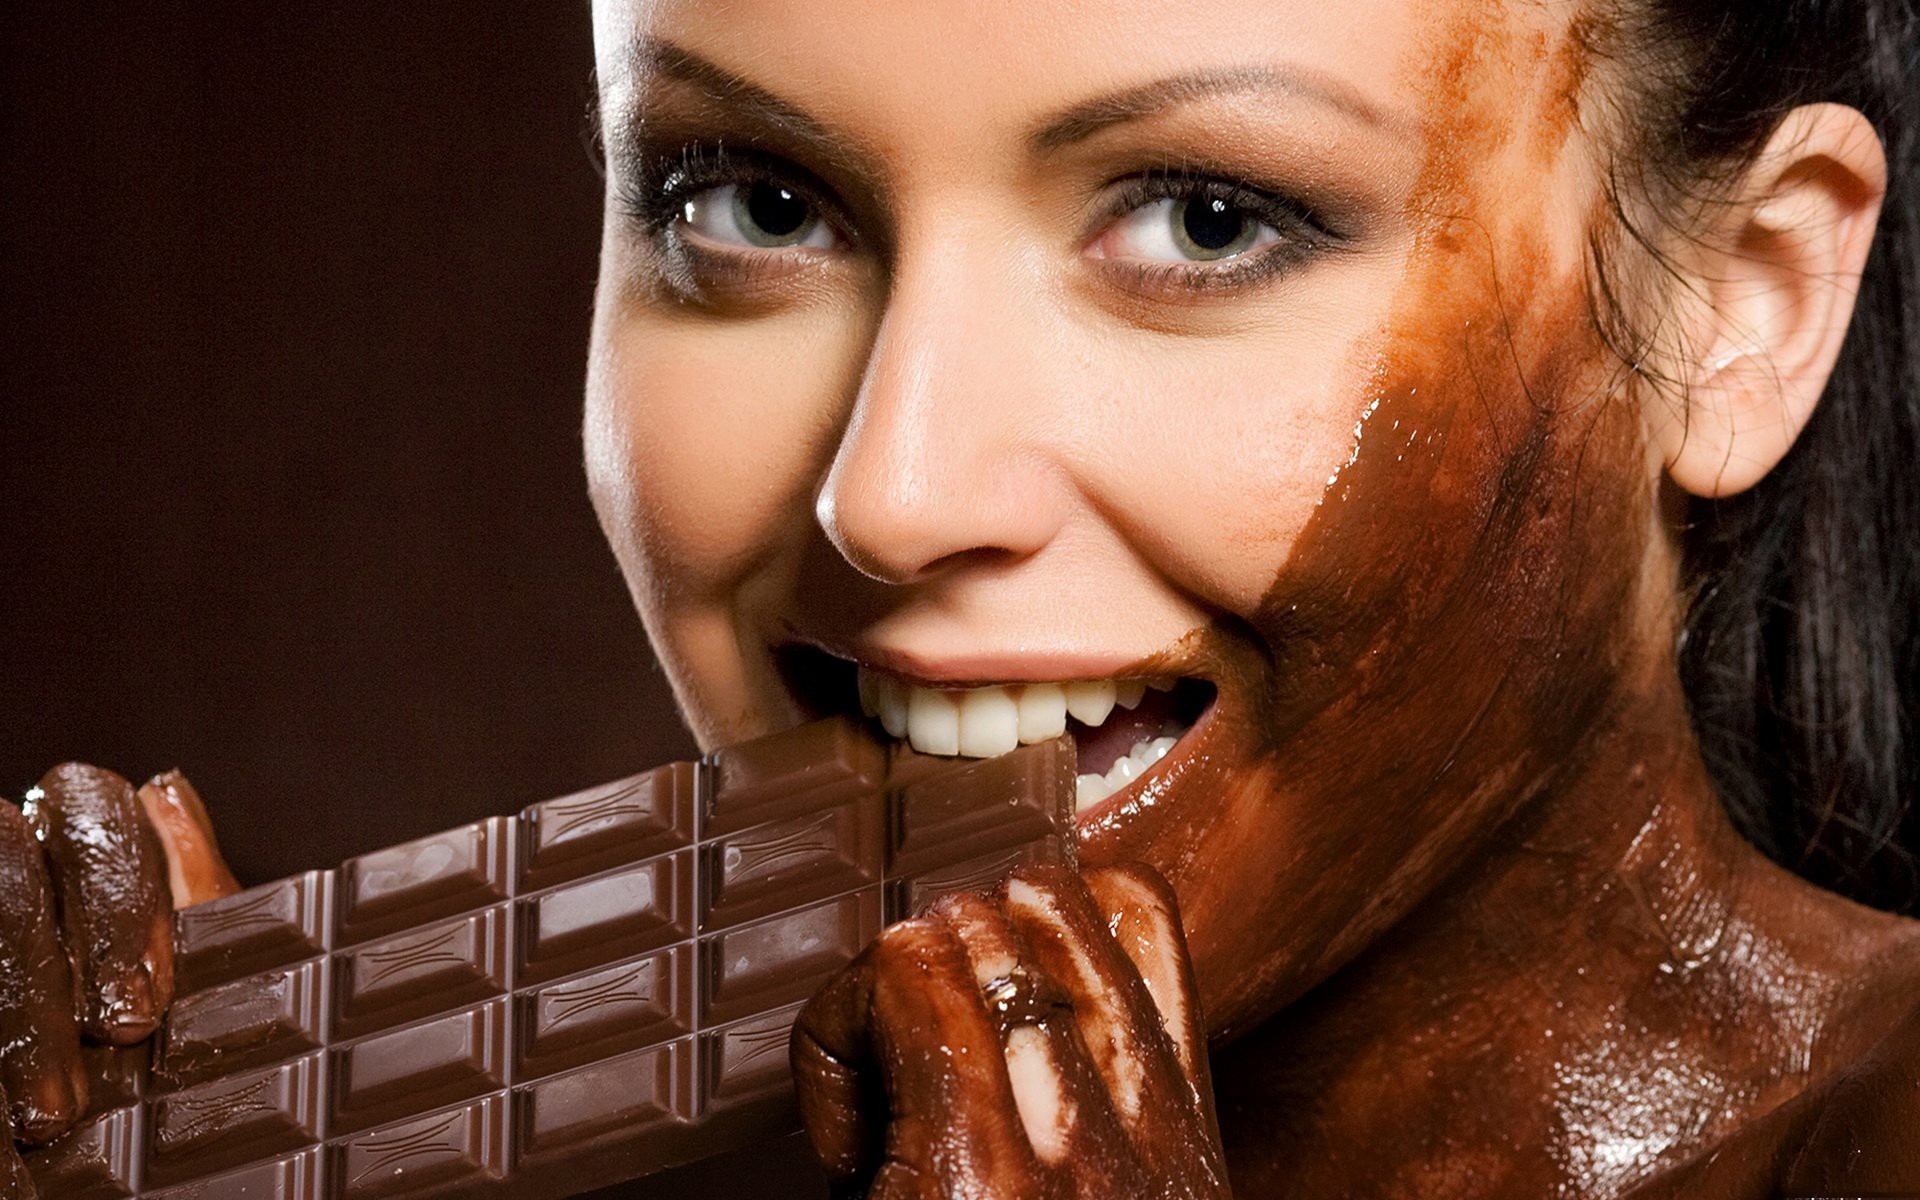 Видео какашки девушки. Девушка в шоколаде. Девушка с шоколадкой. Красивая девушка с шоколадом. Шоколадная девочка.